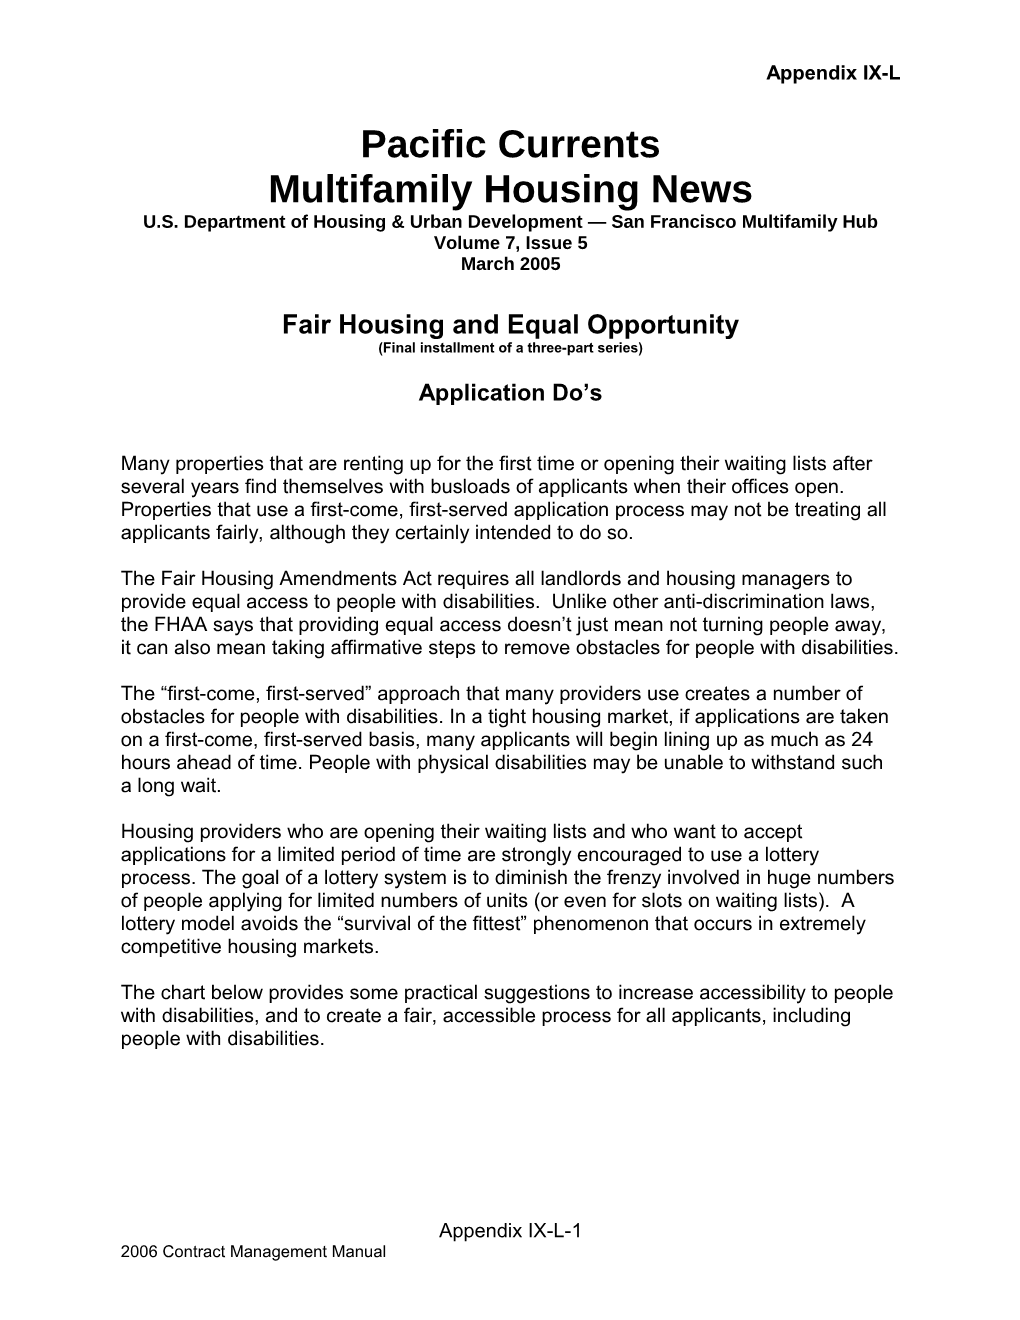 Multifamily Housing News